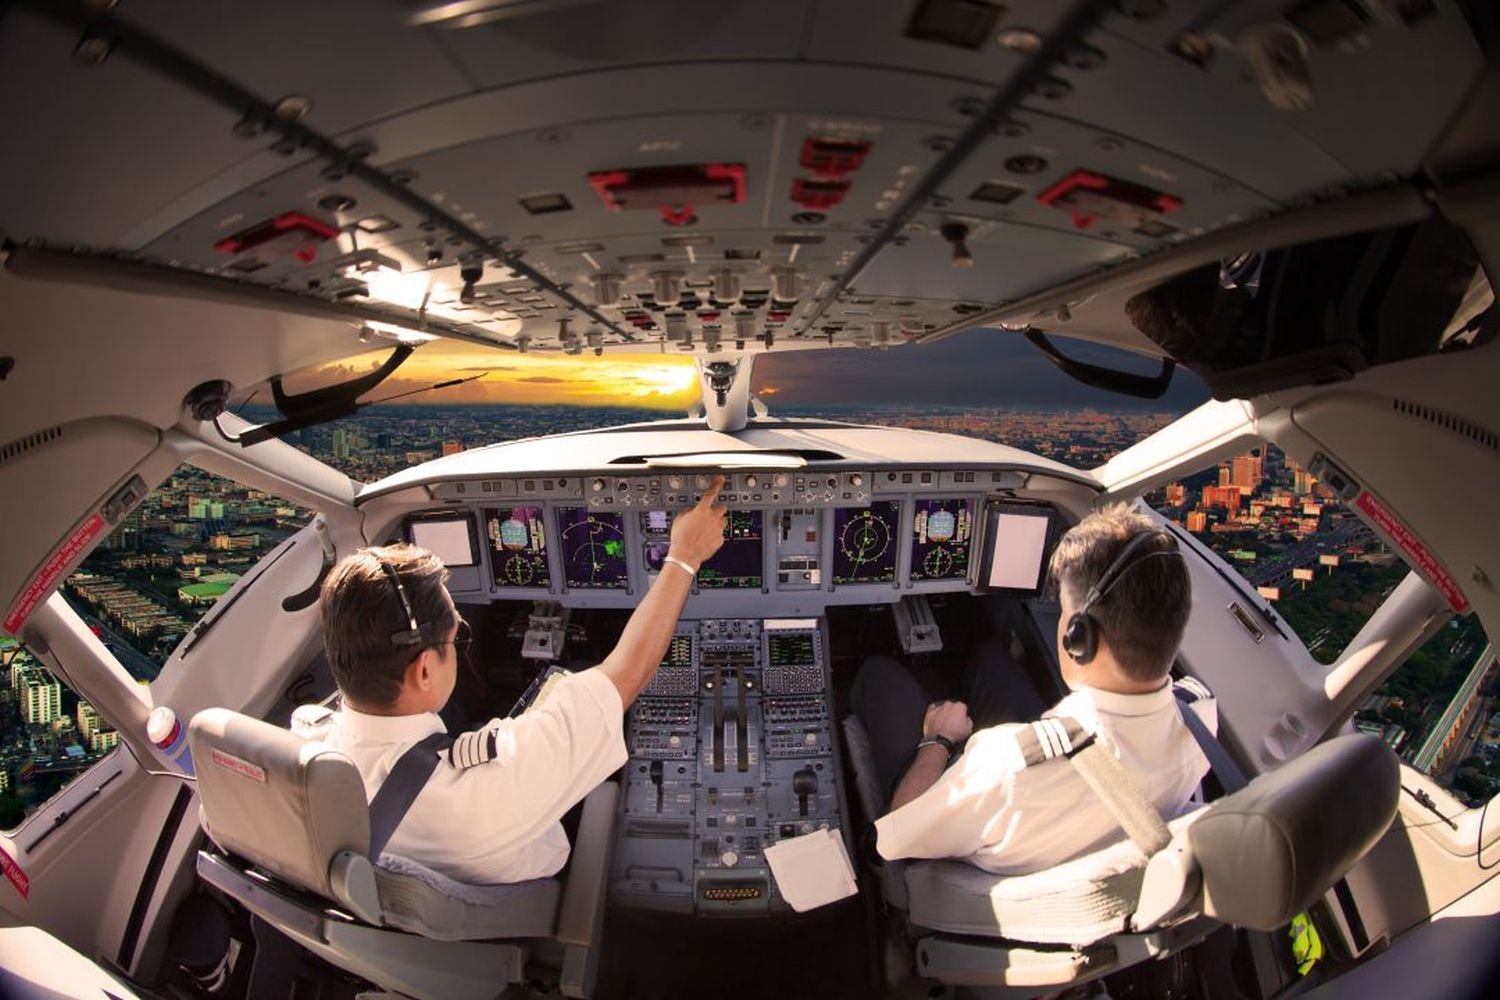 Aircraft Maintenance and Management – Aviation Technology